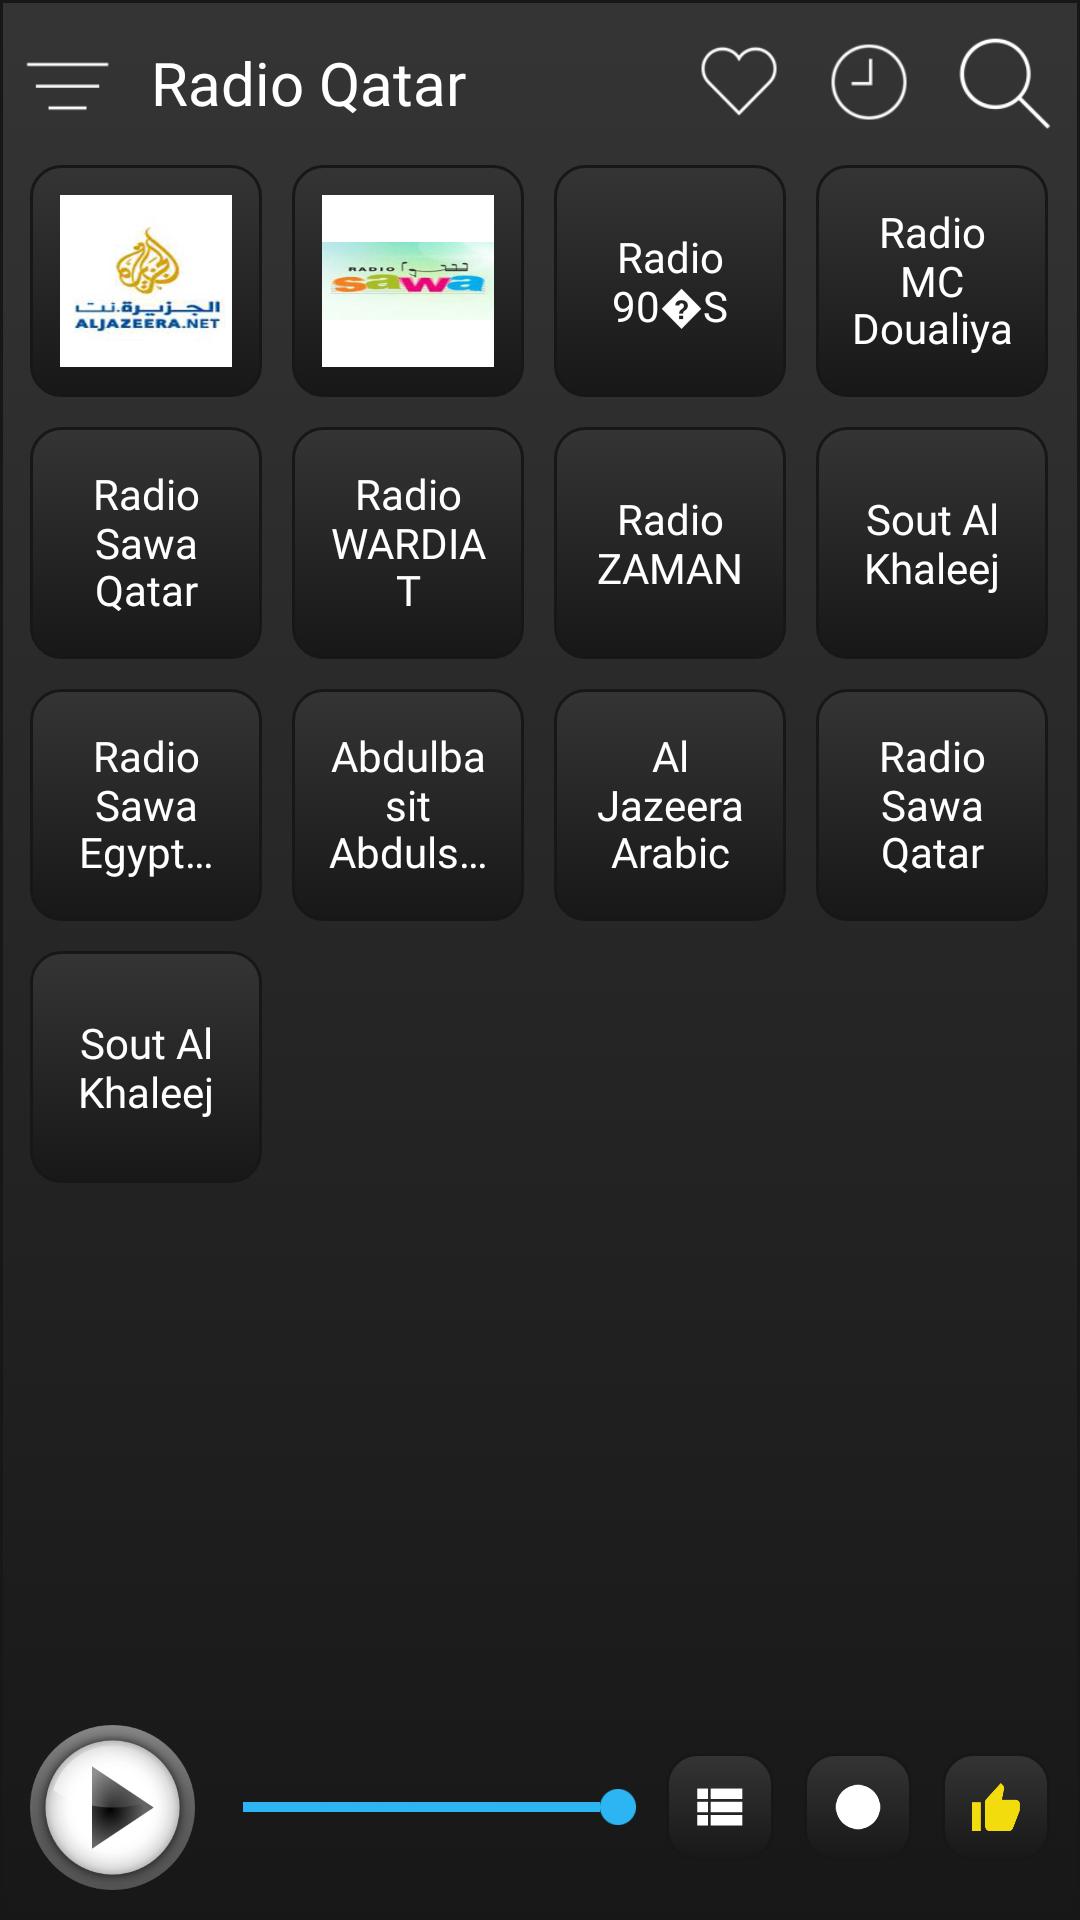 Qatar Radio Stations Online - Qatar FM AM Music for Android - APK Download